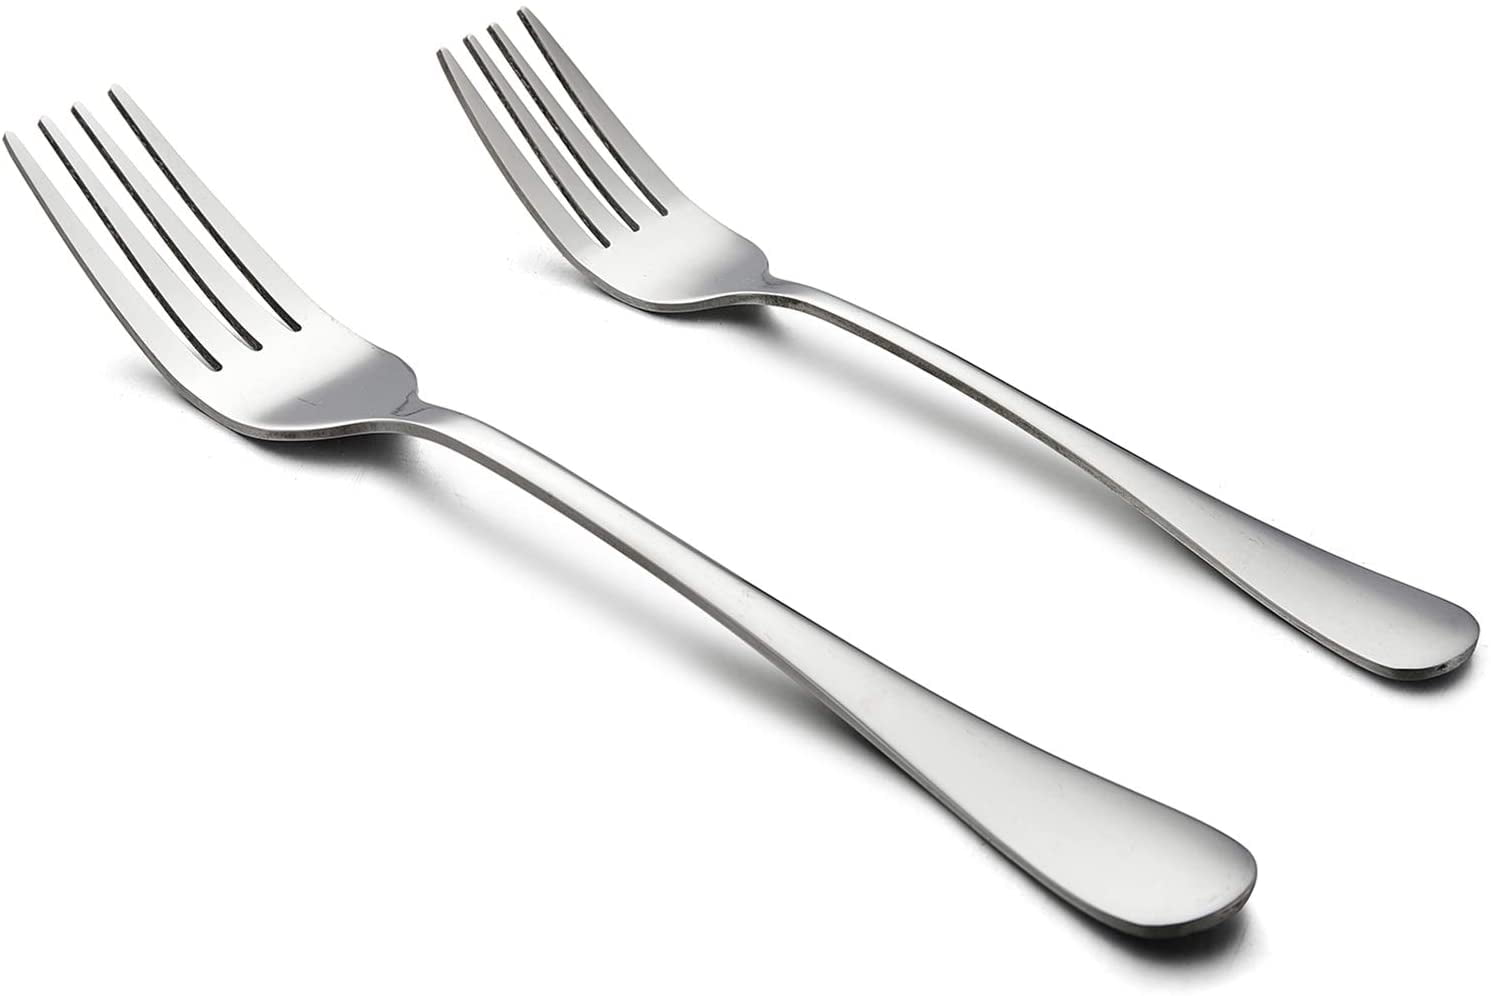 Details about   LIANYU 20-Piece Silverware Flatware Cutlery Set Stainless Steel Utensils Servic 